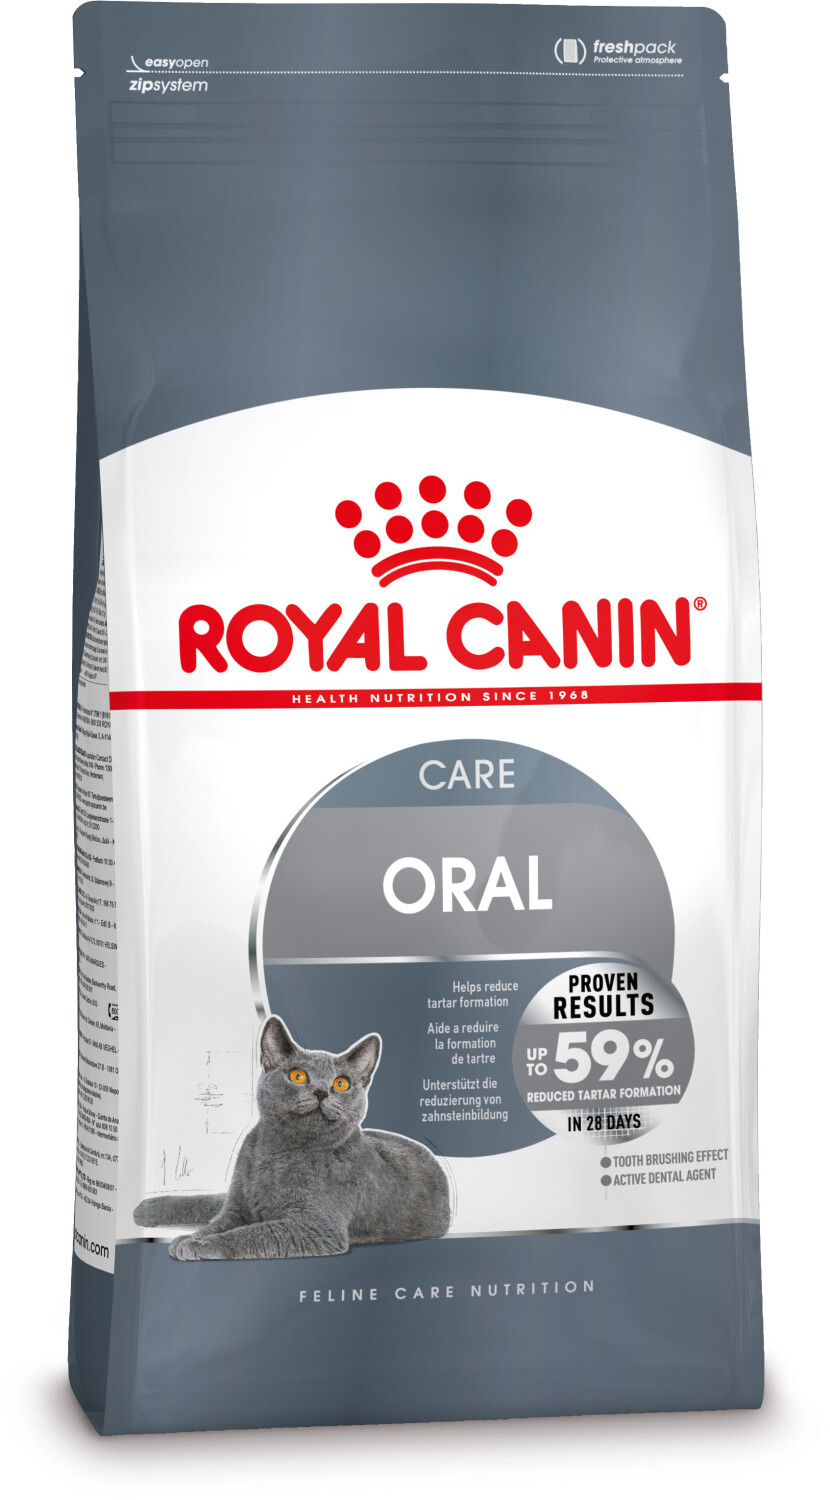 Image of Royal Canin Feline Care Nutrition Oral Care dry food 8kg